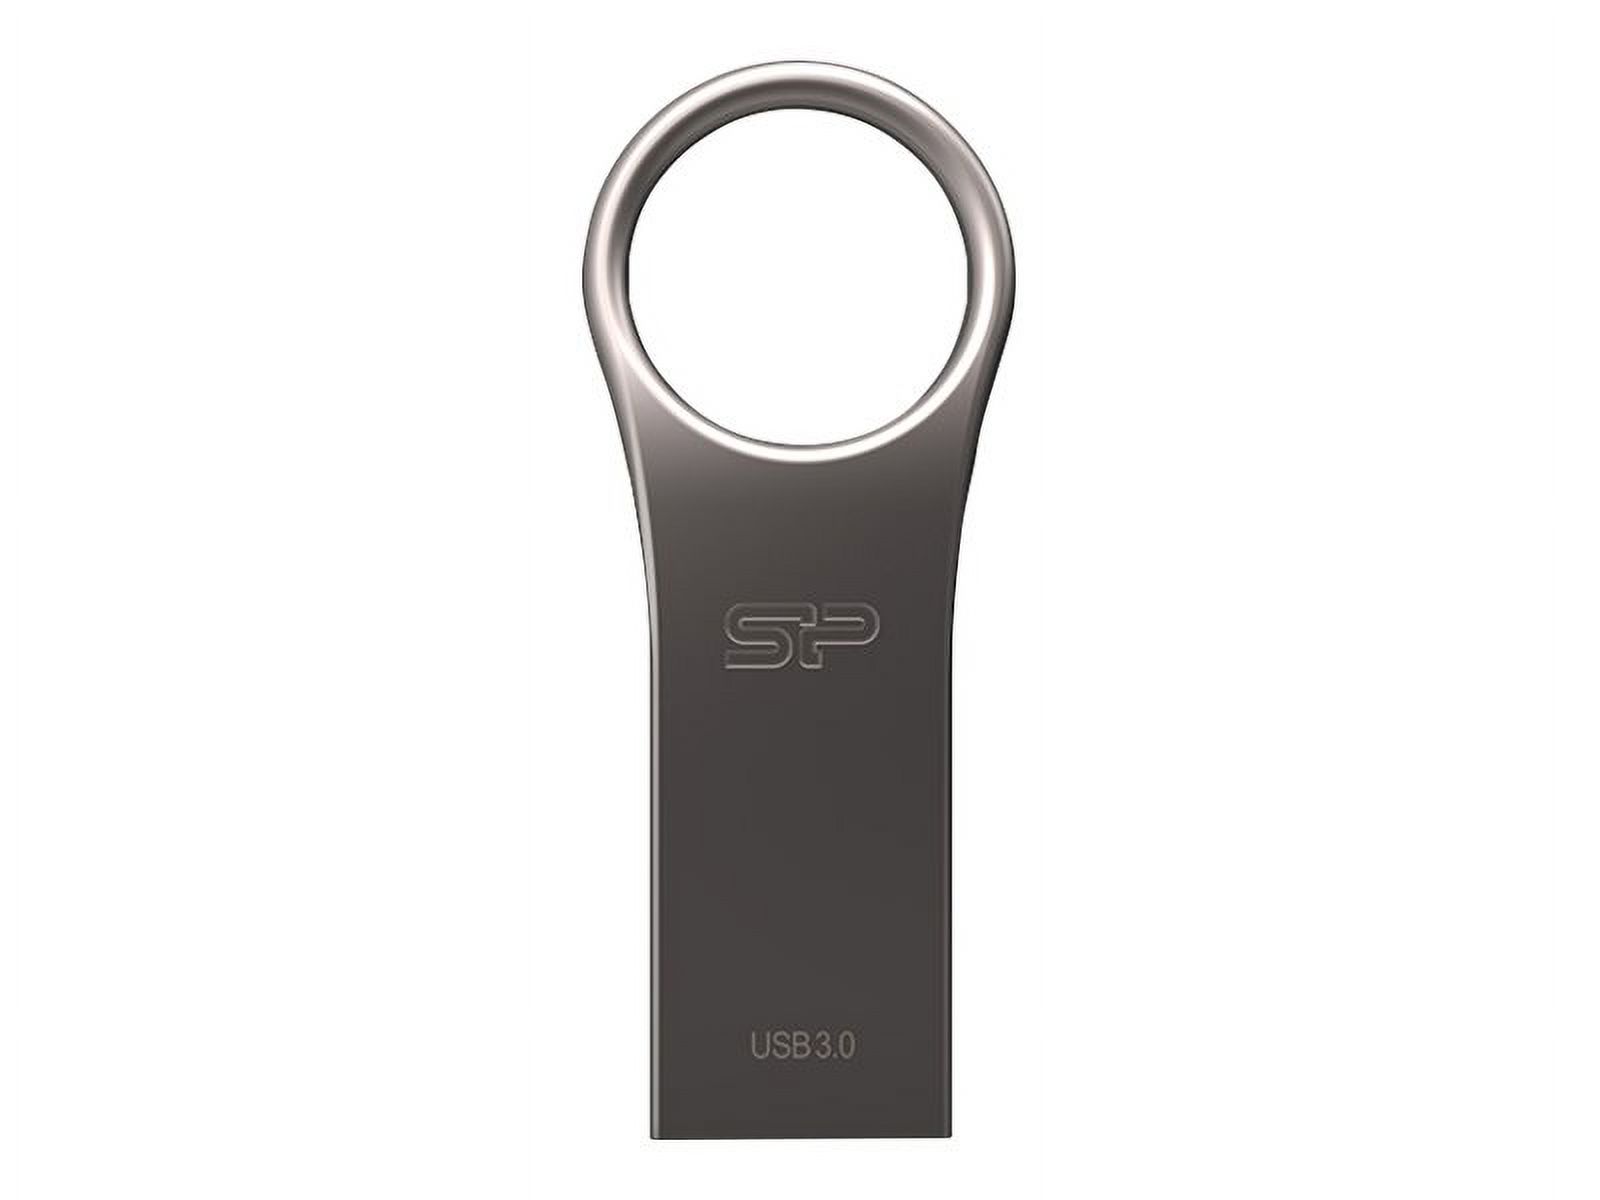 SILICON POWER Jewel J80 - USB flash drive - 128 GB - USB 3.0 - silver, titanium - image 1 of 5